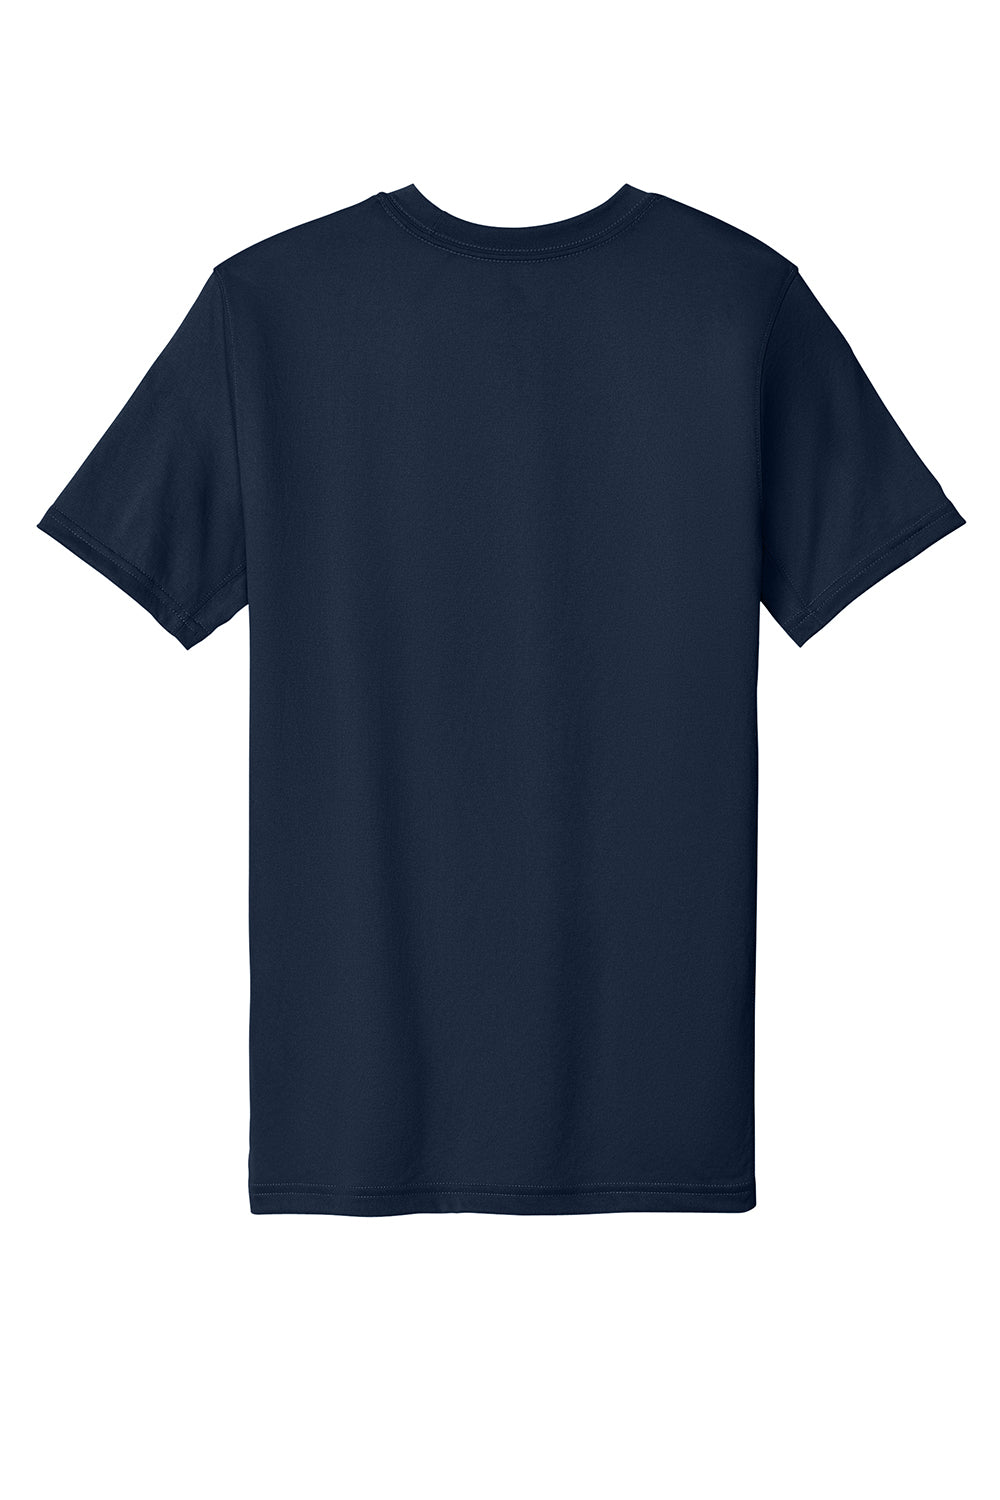 Nike NKDX8730 Mens rLegend Dri-Fit Moisture Wicking Short Sleeve Crewneck T-Shirt College Navy Blue Flat Back